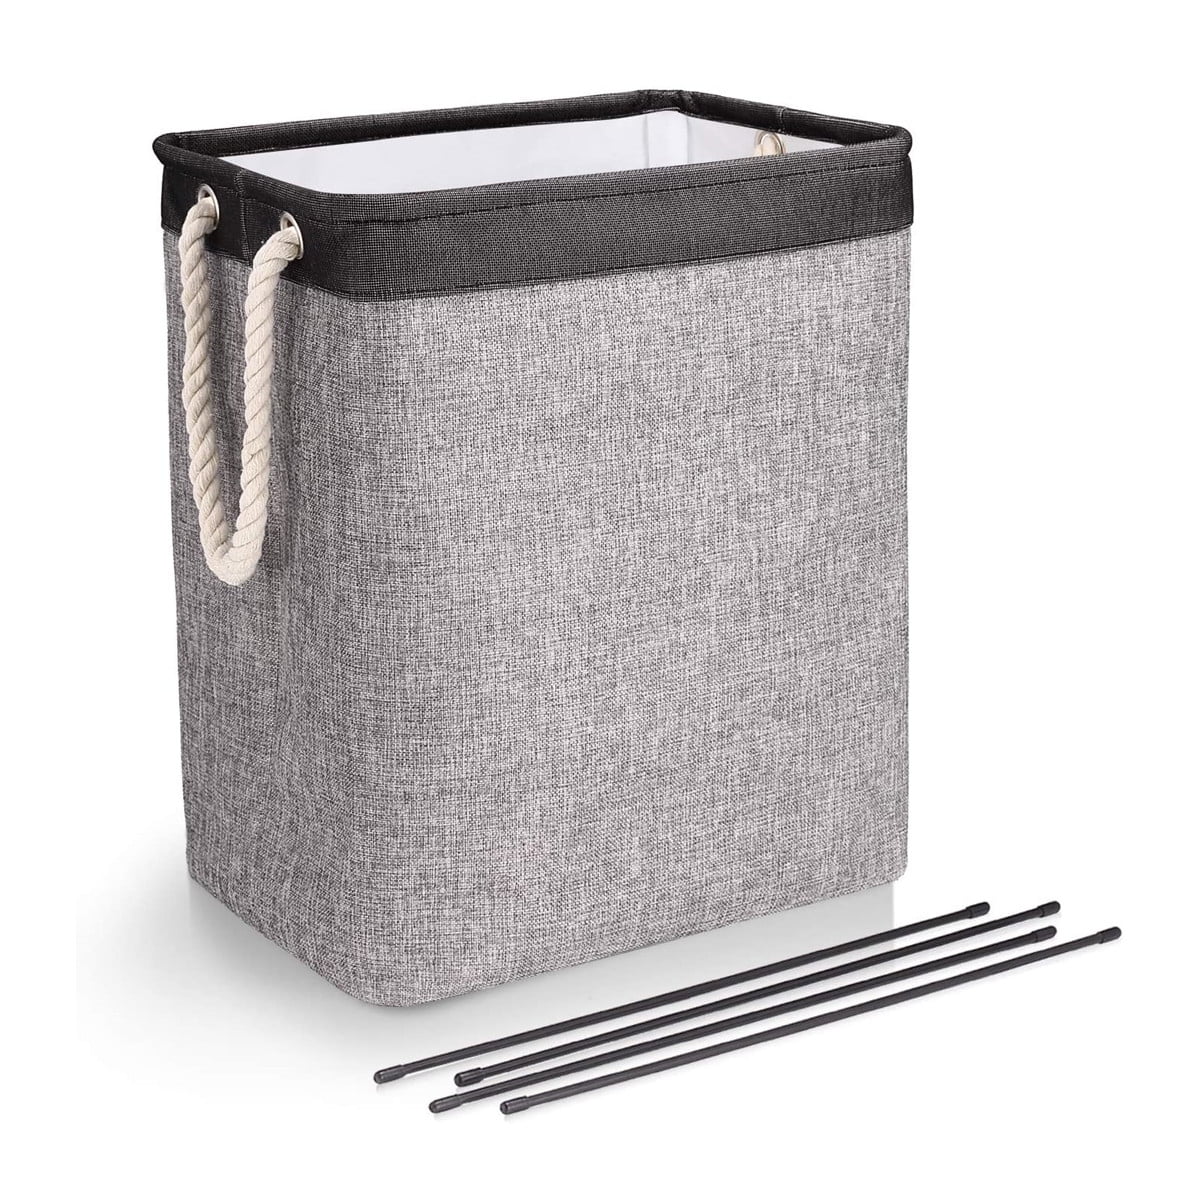 Details about   Baby Toy Storage Box Laundry Basket picnic Bag Cotton Washing Organizer Foldable 